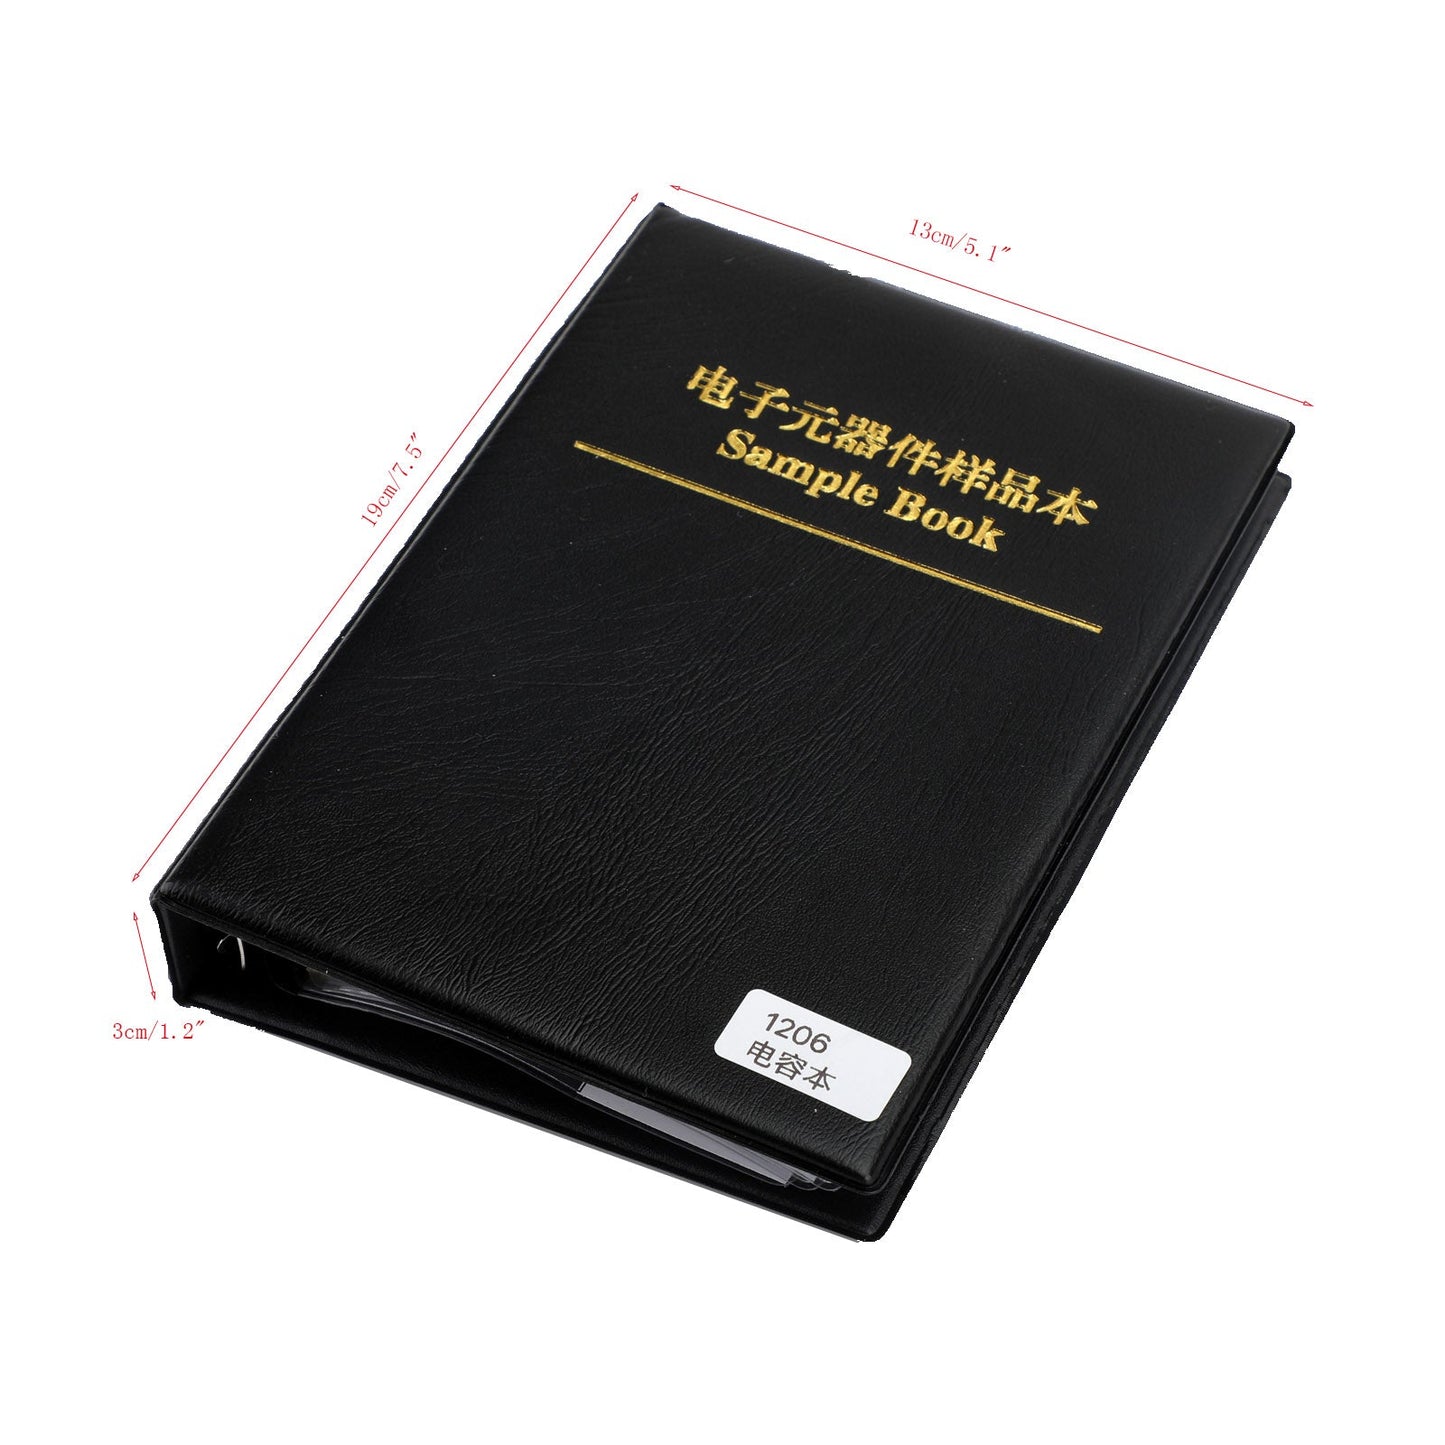 SMD1206 Capacitor sample book 80 values * 25pcs=2000pcs Capacitor kit SMD